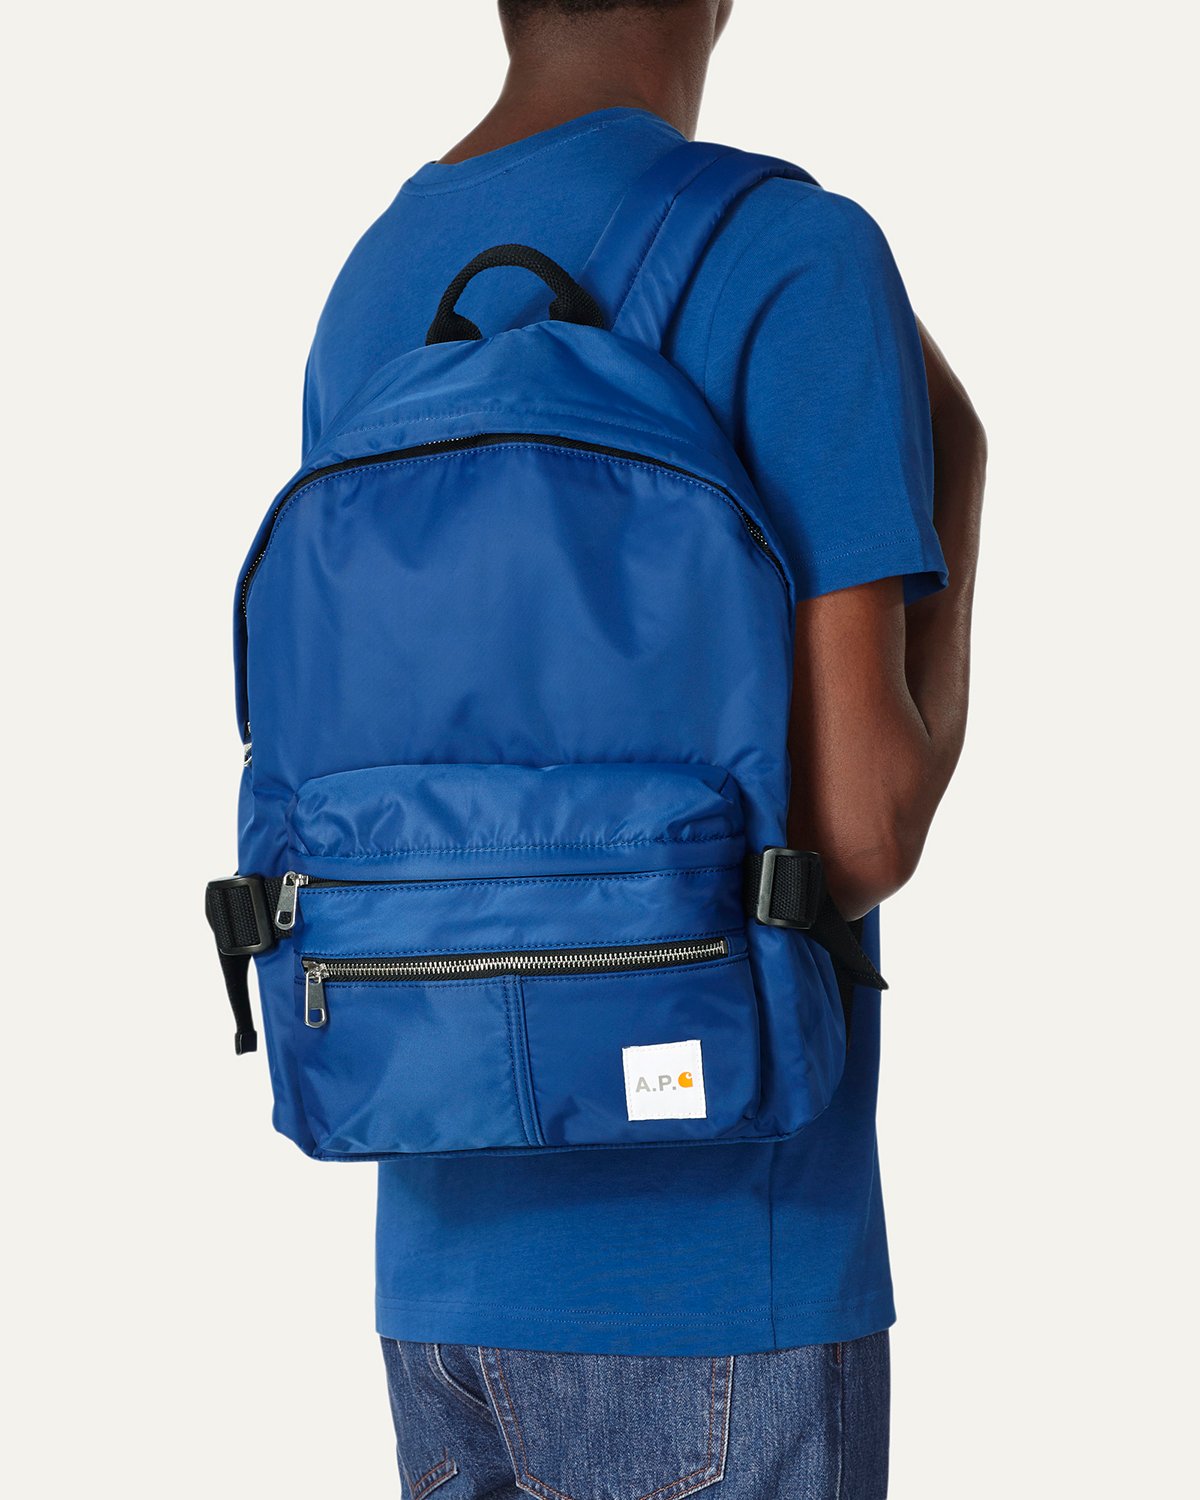 A.P.C. x Carhartt WIP - Shawn Backpack Indigo - Accessories - Blue - Image 2